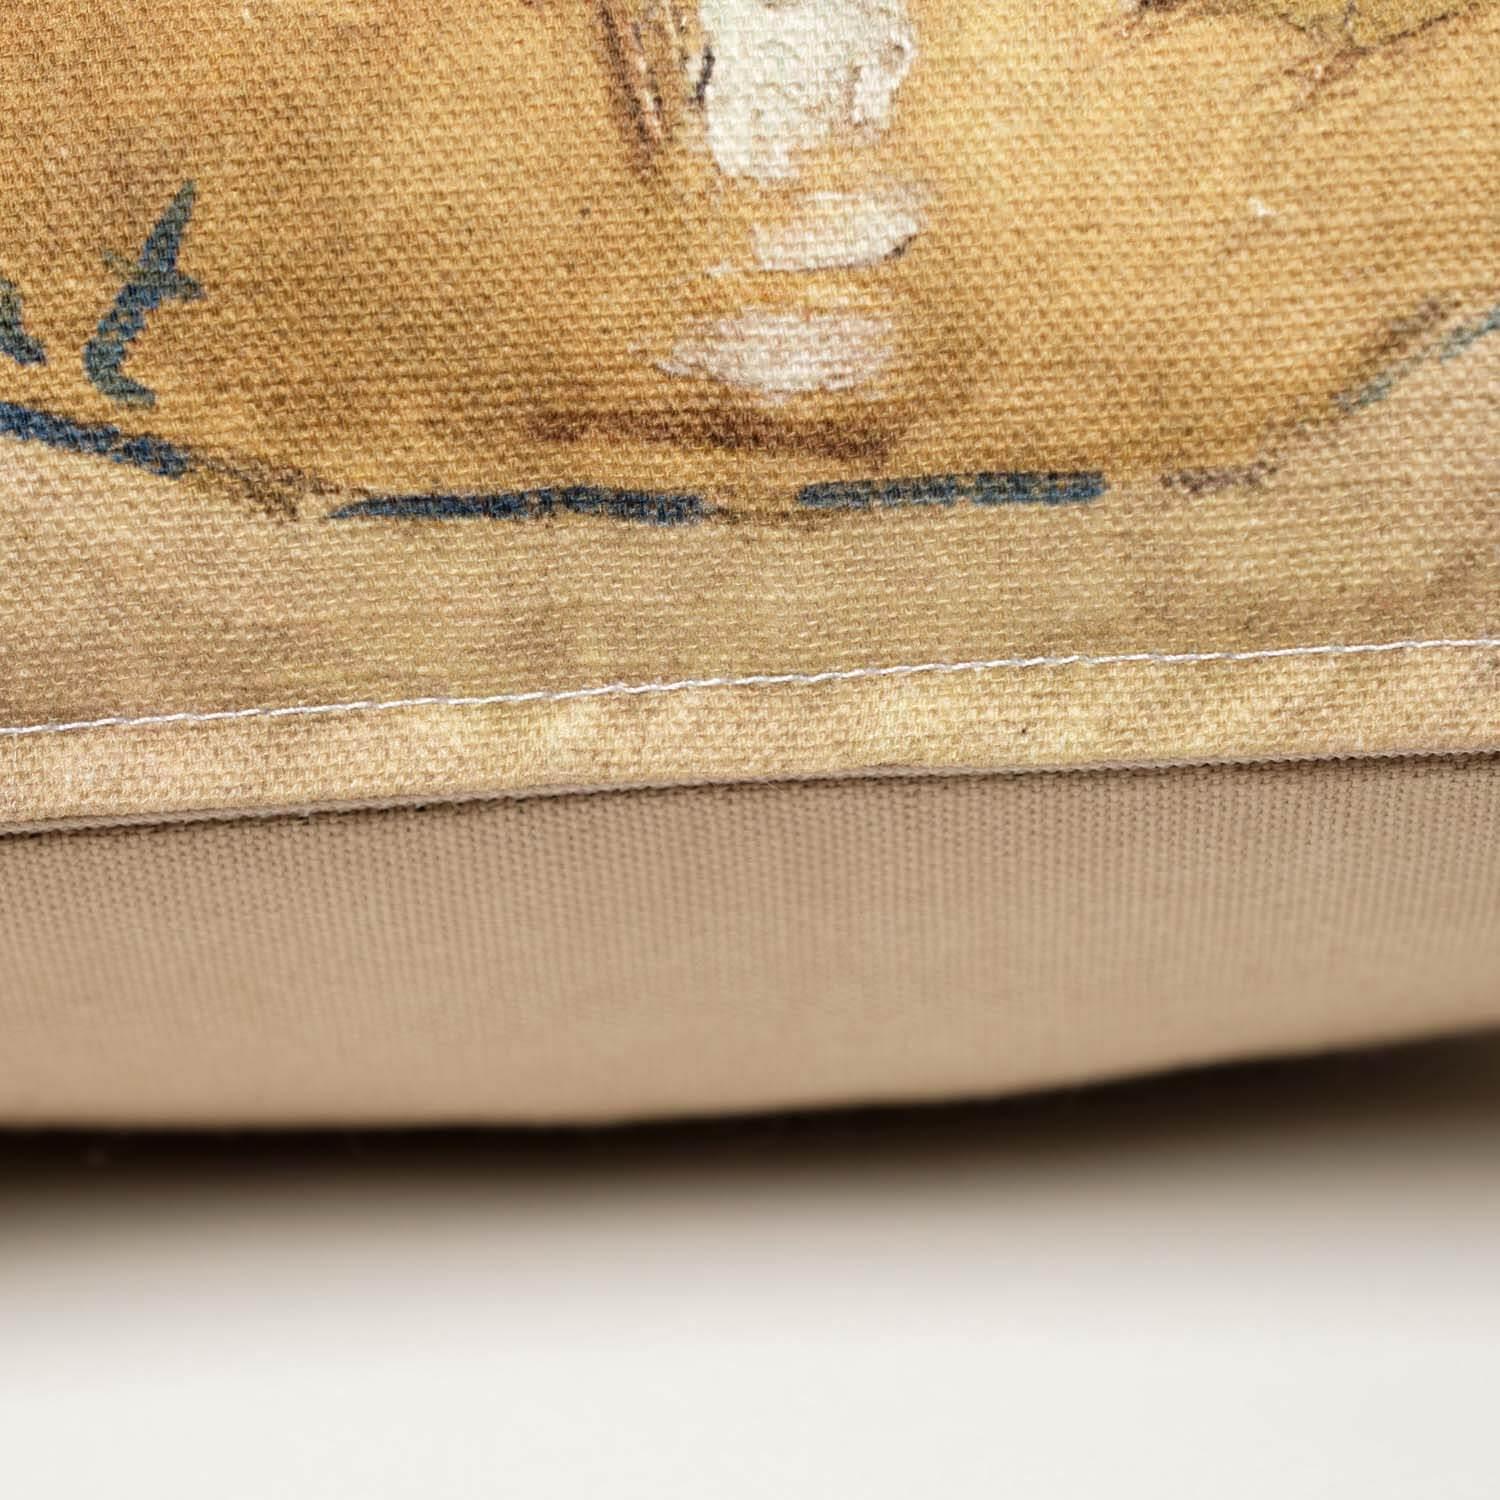 Monet Bathers at La Grenouillère National Gallery Cushion - Handmade Cushions UK - WeLoveCushions